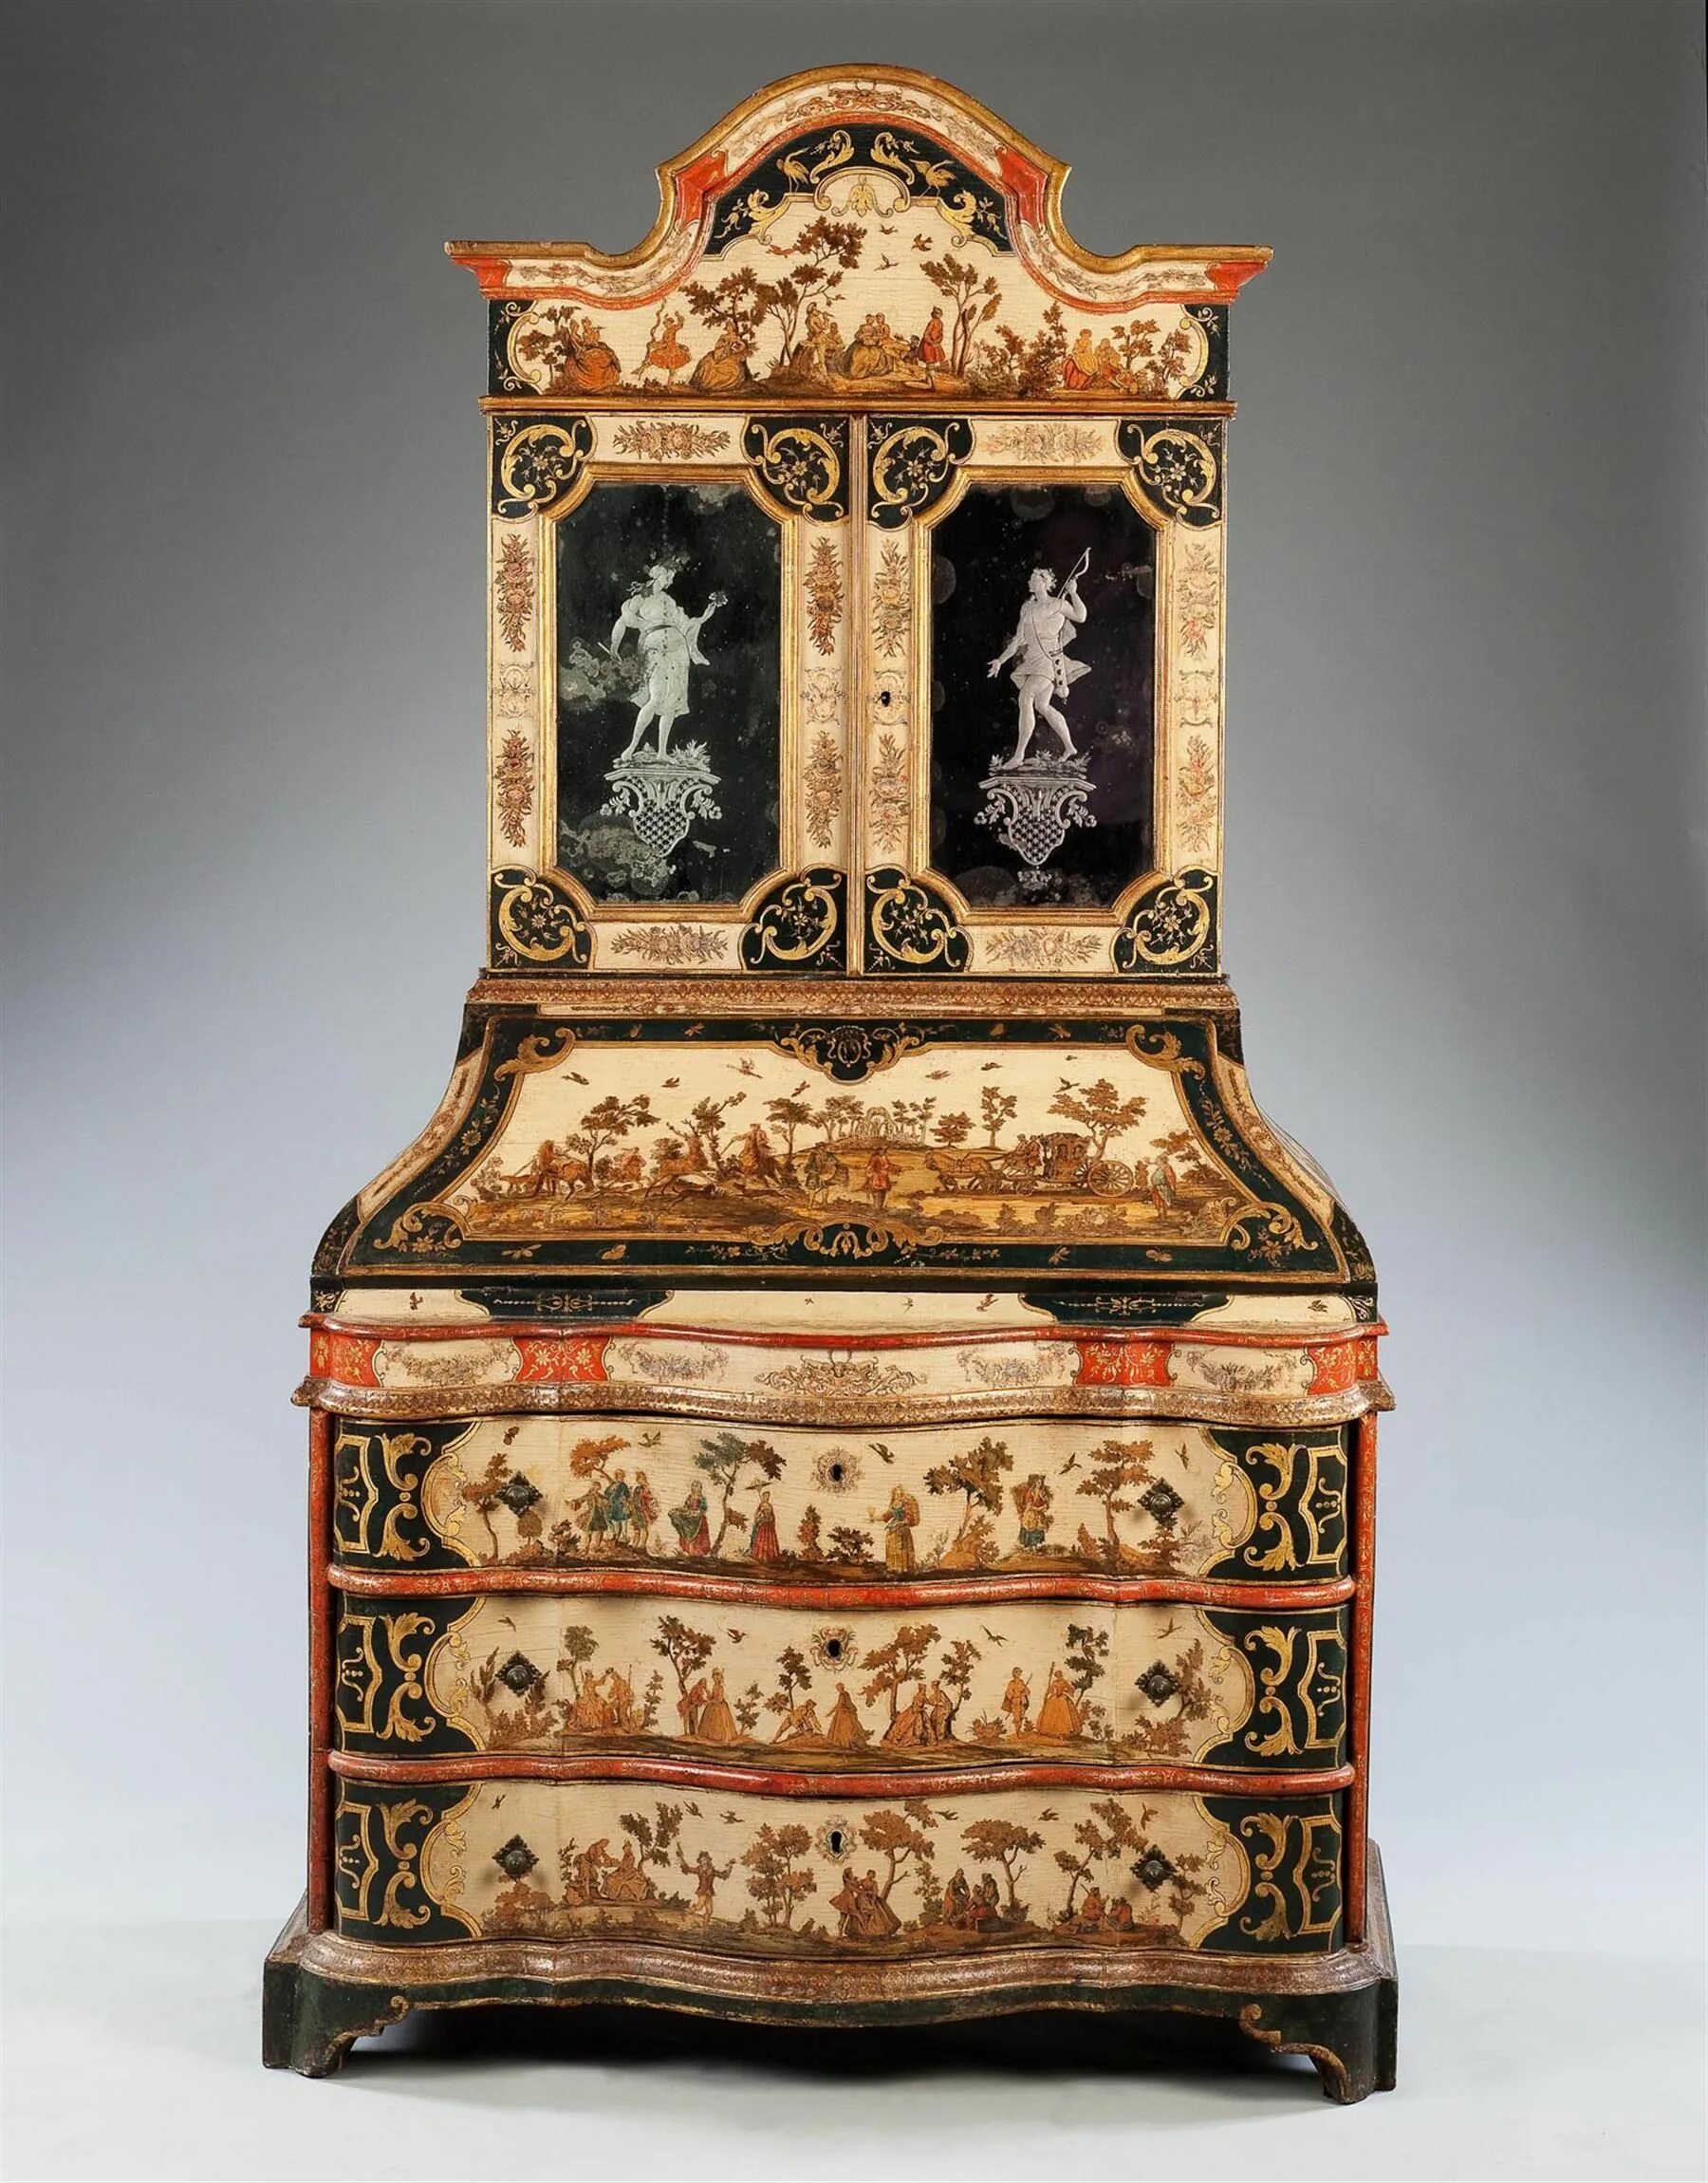 Мебель 17 века. Шинуазри мебель 18 век. Старинная мебель 18 века. Европейская мебель 18 века.